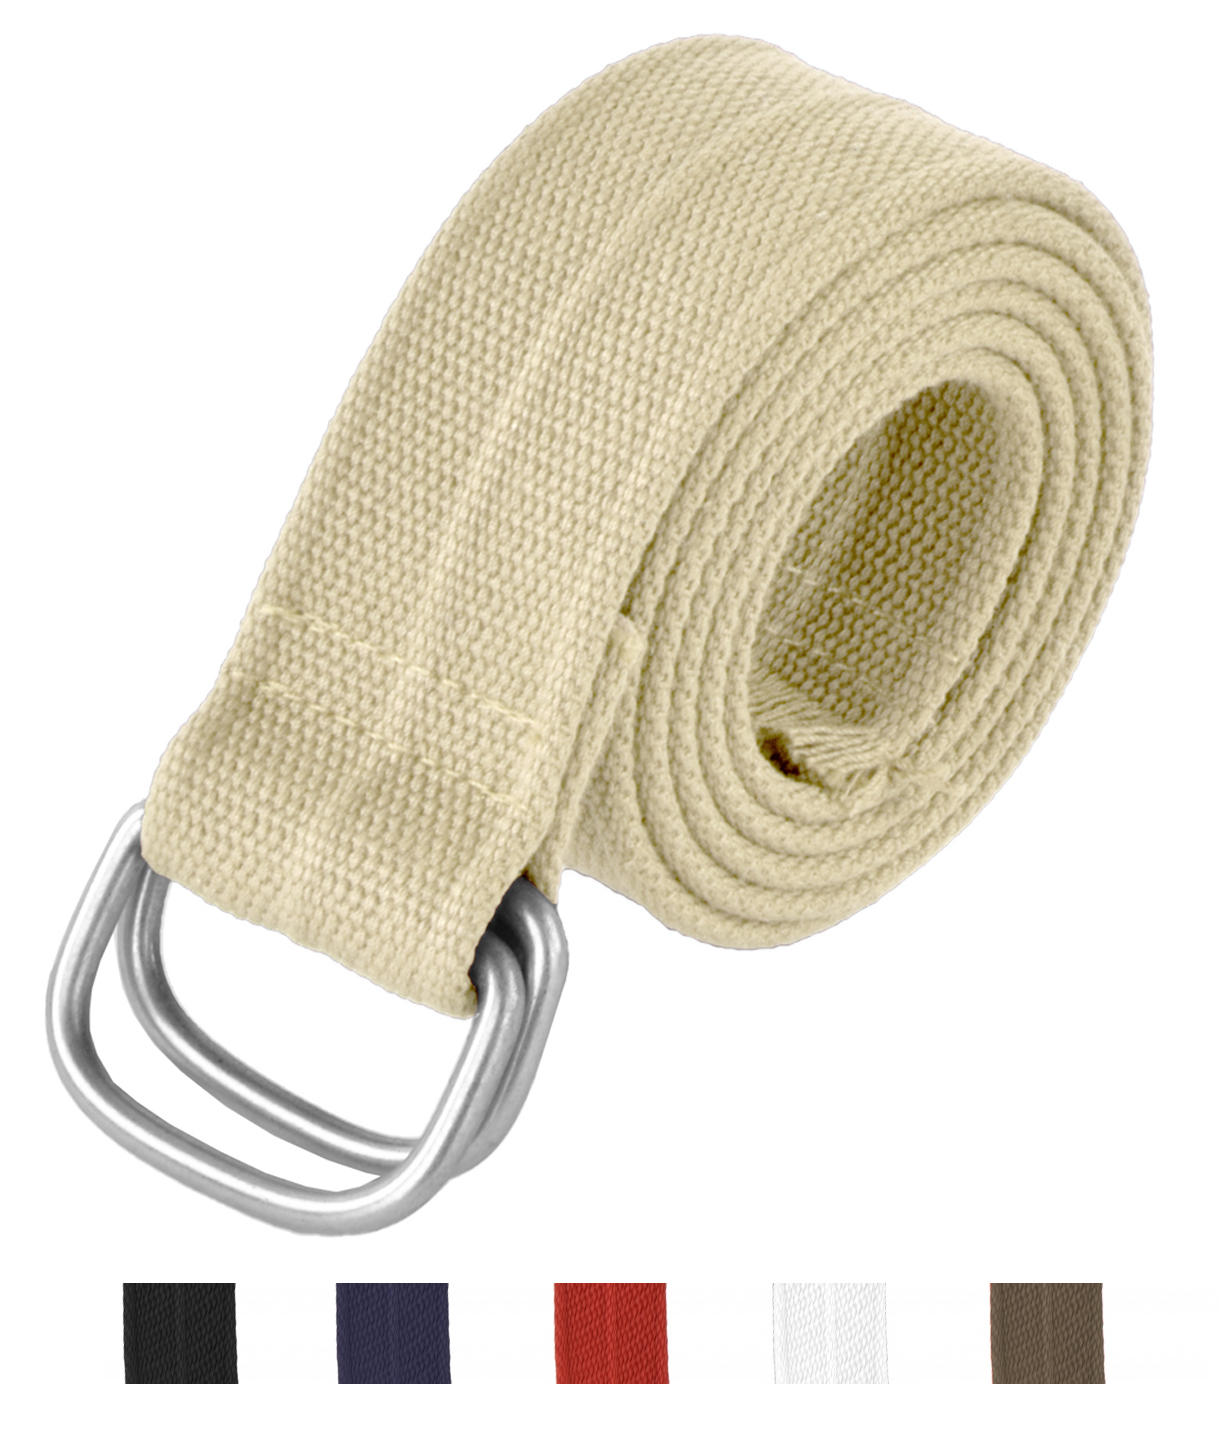 Dabung - Cotton Mens Belt Loop Buckle Silver Buckle Cloth Belts Designer Belts